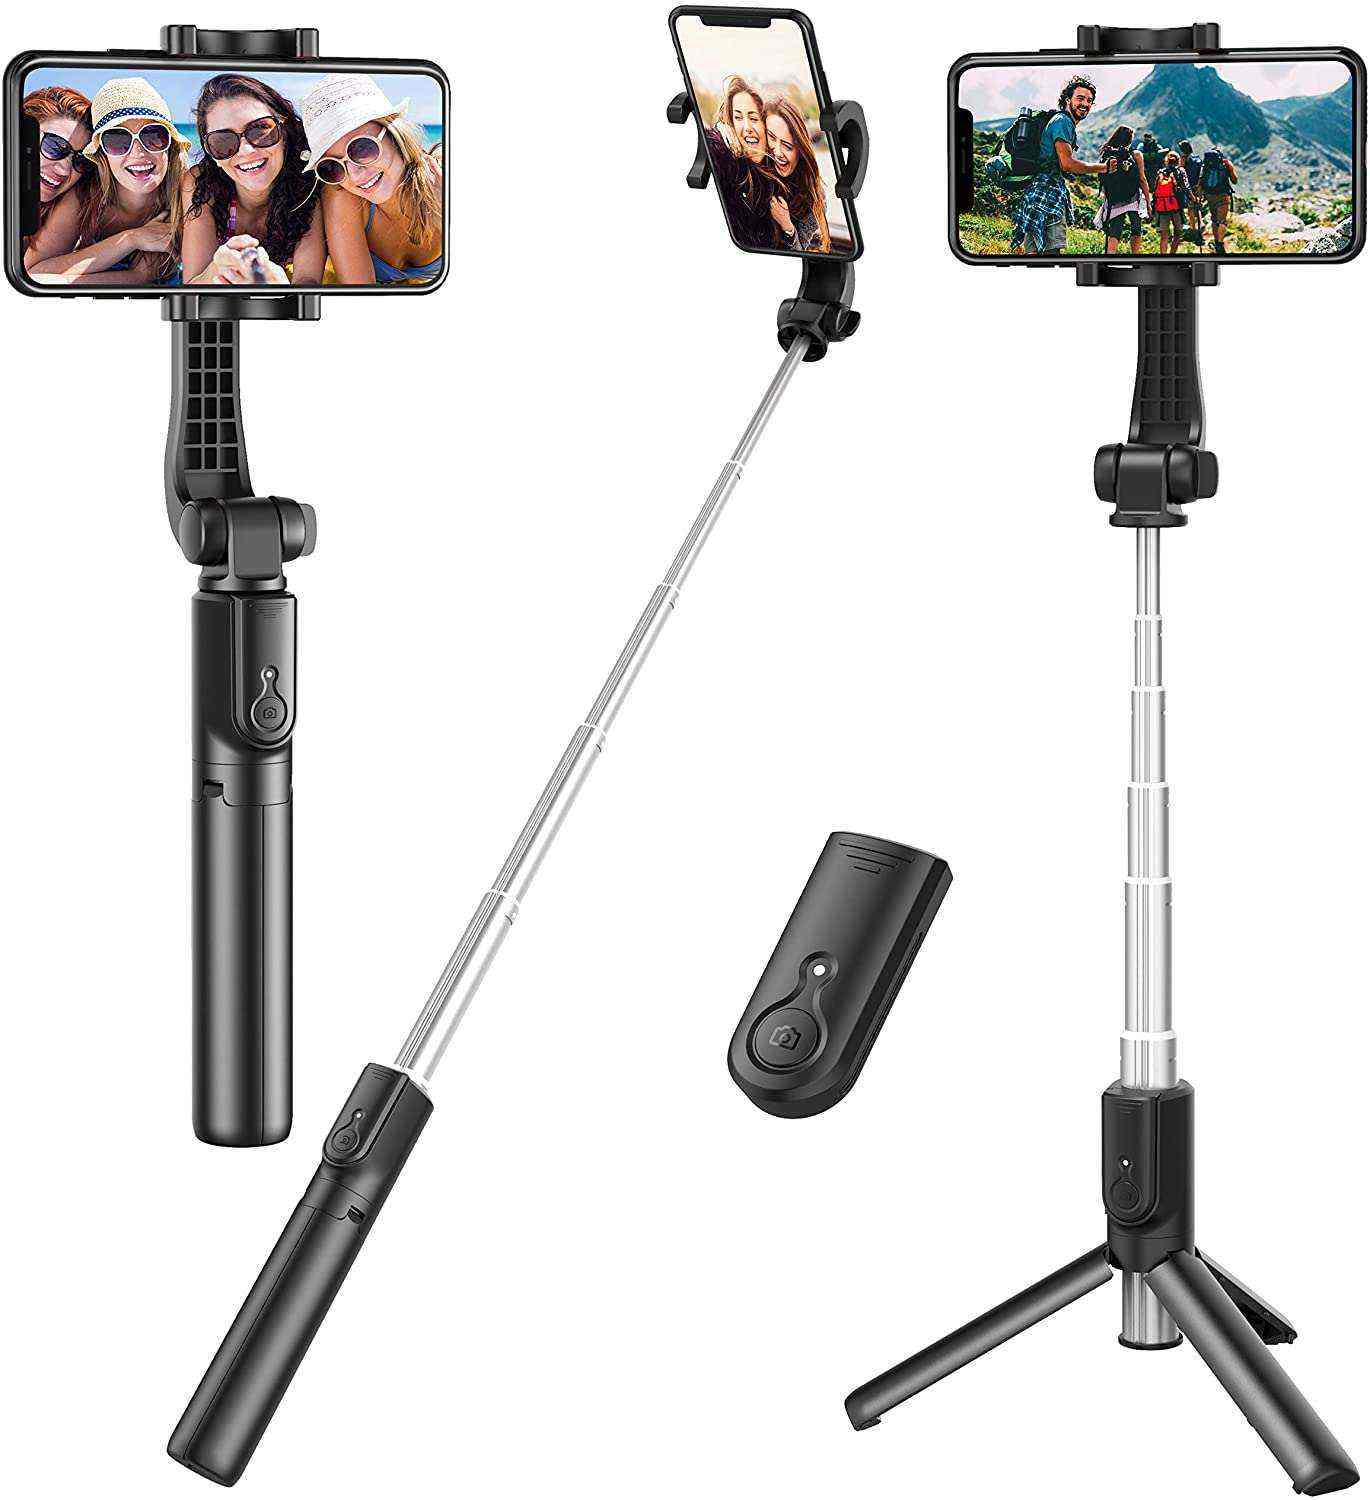 Adjustable selfie stick